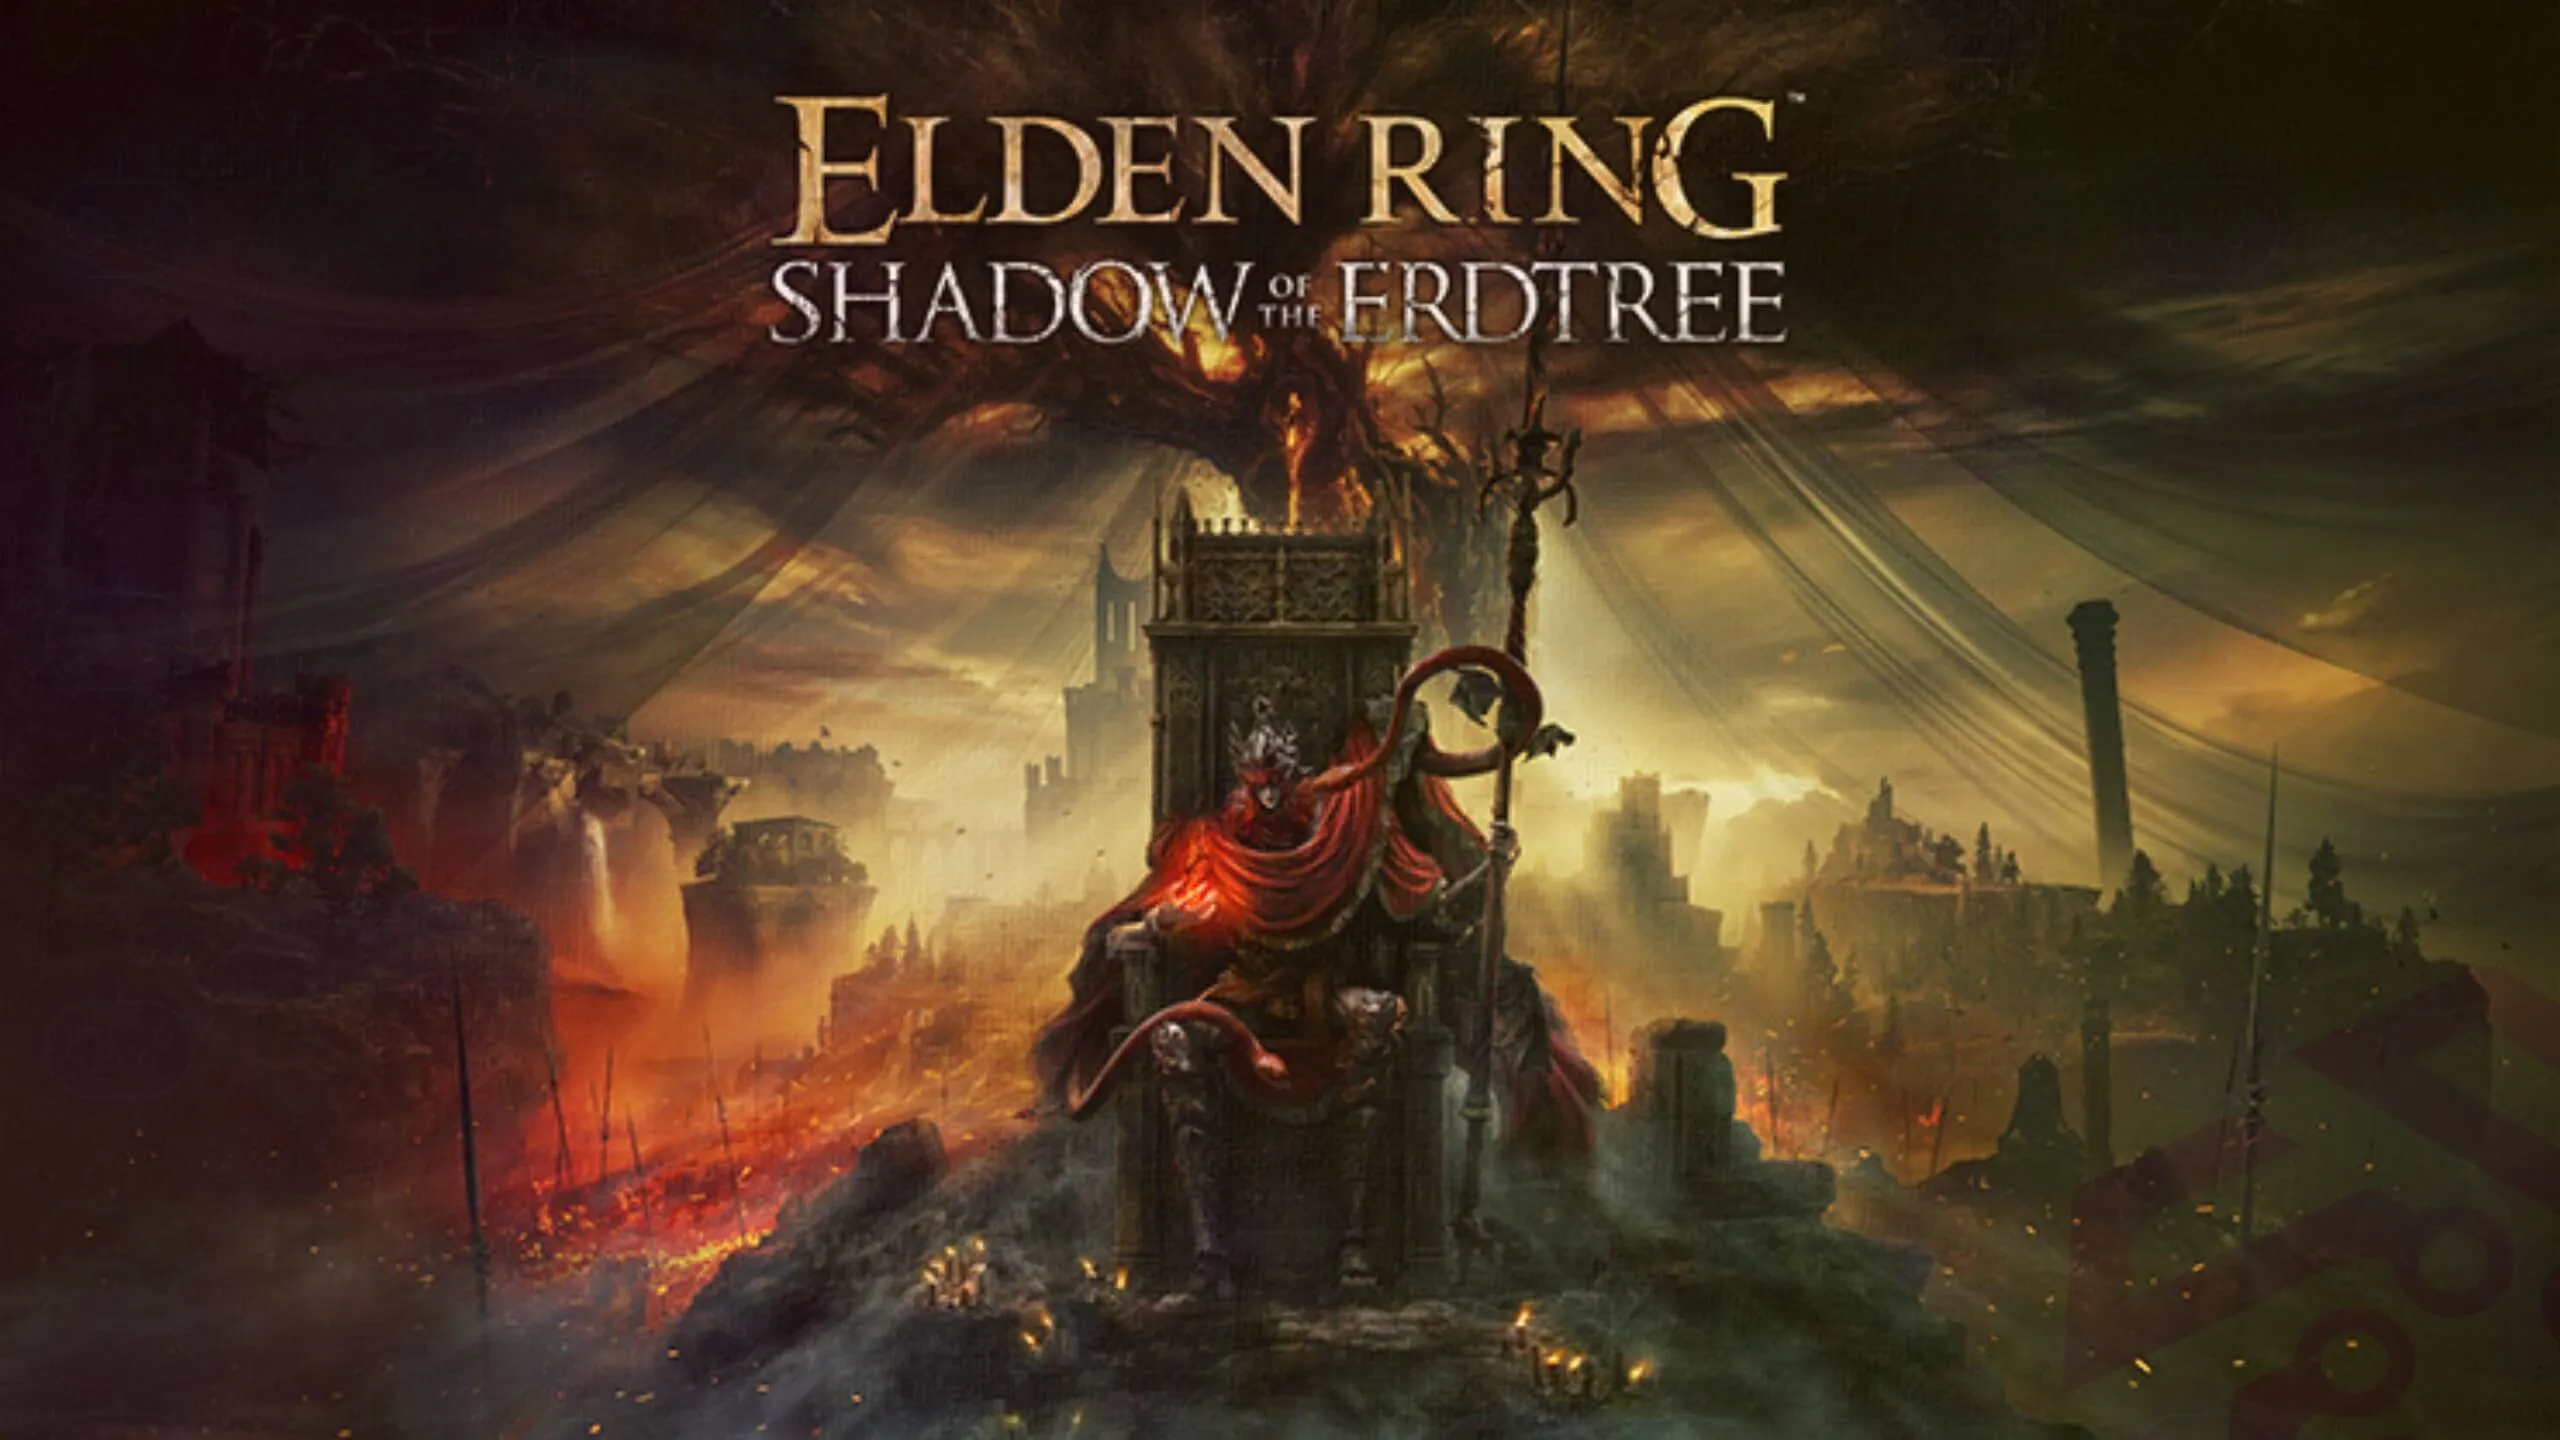 Elden Ring Shadow of the Eldtree DLC teaser image